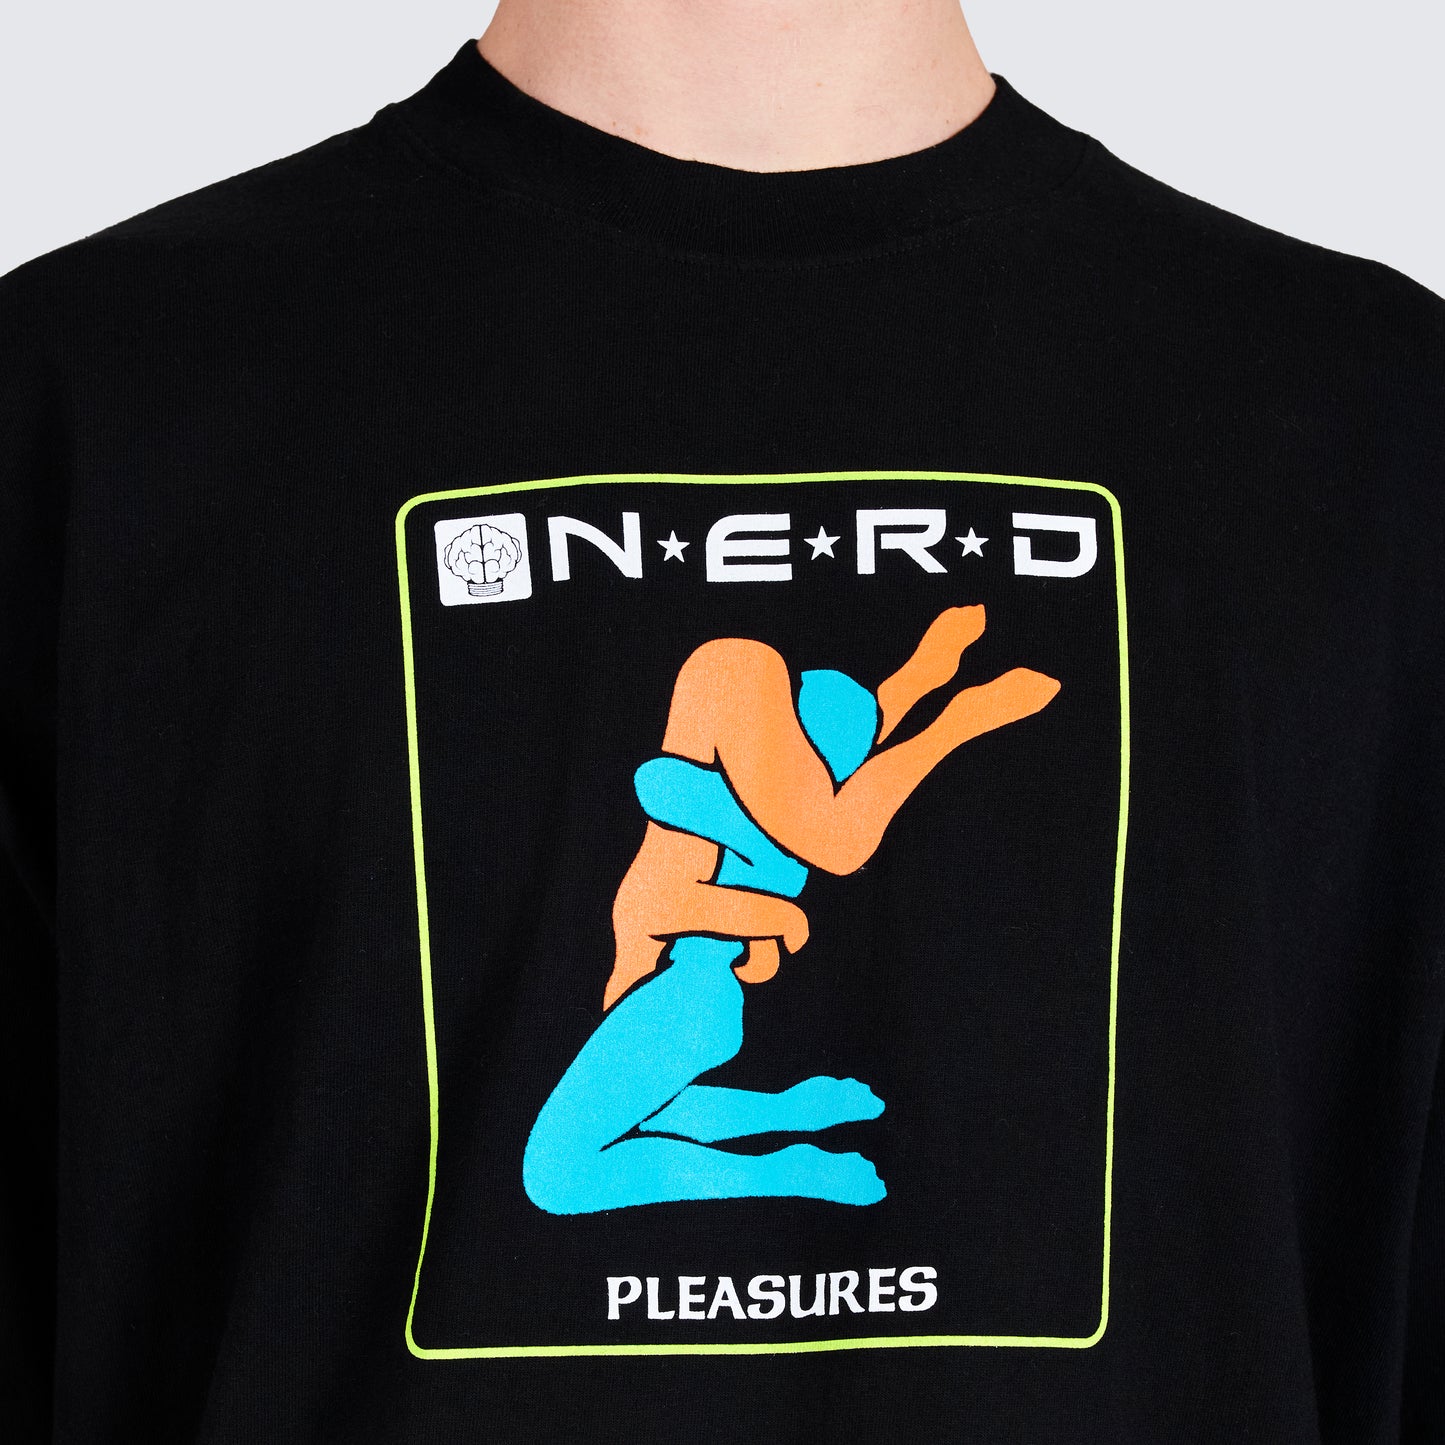 Pleasures Provider T-Shirt in Black